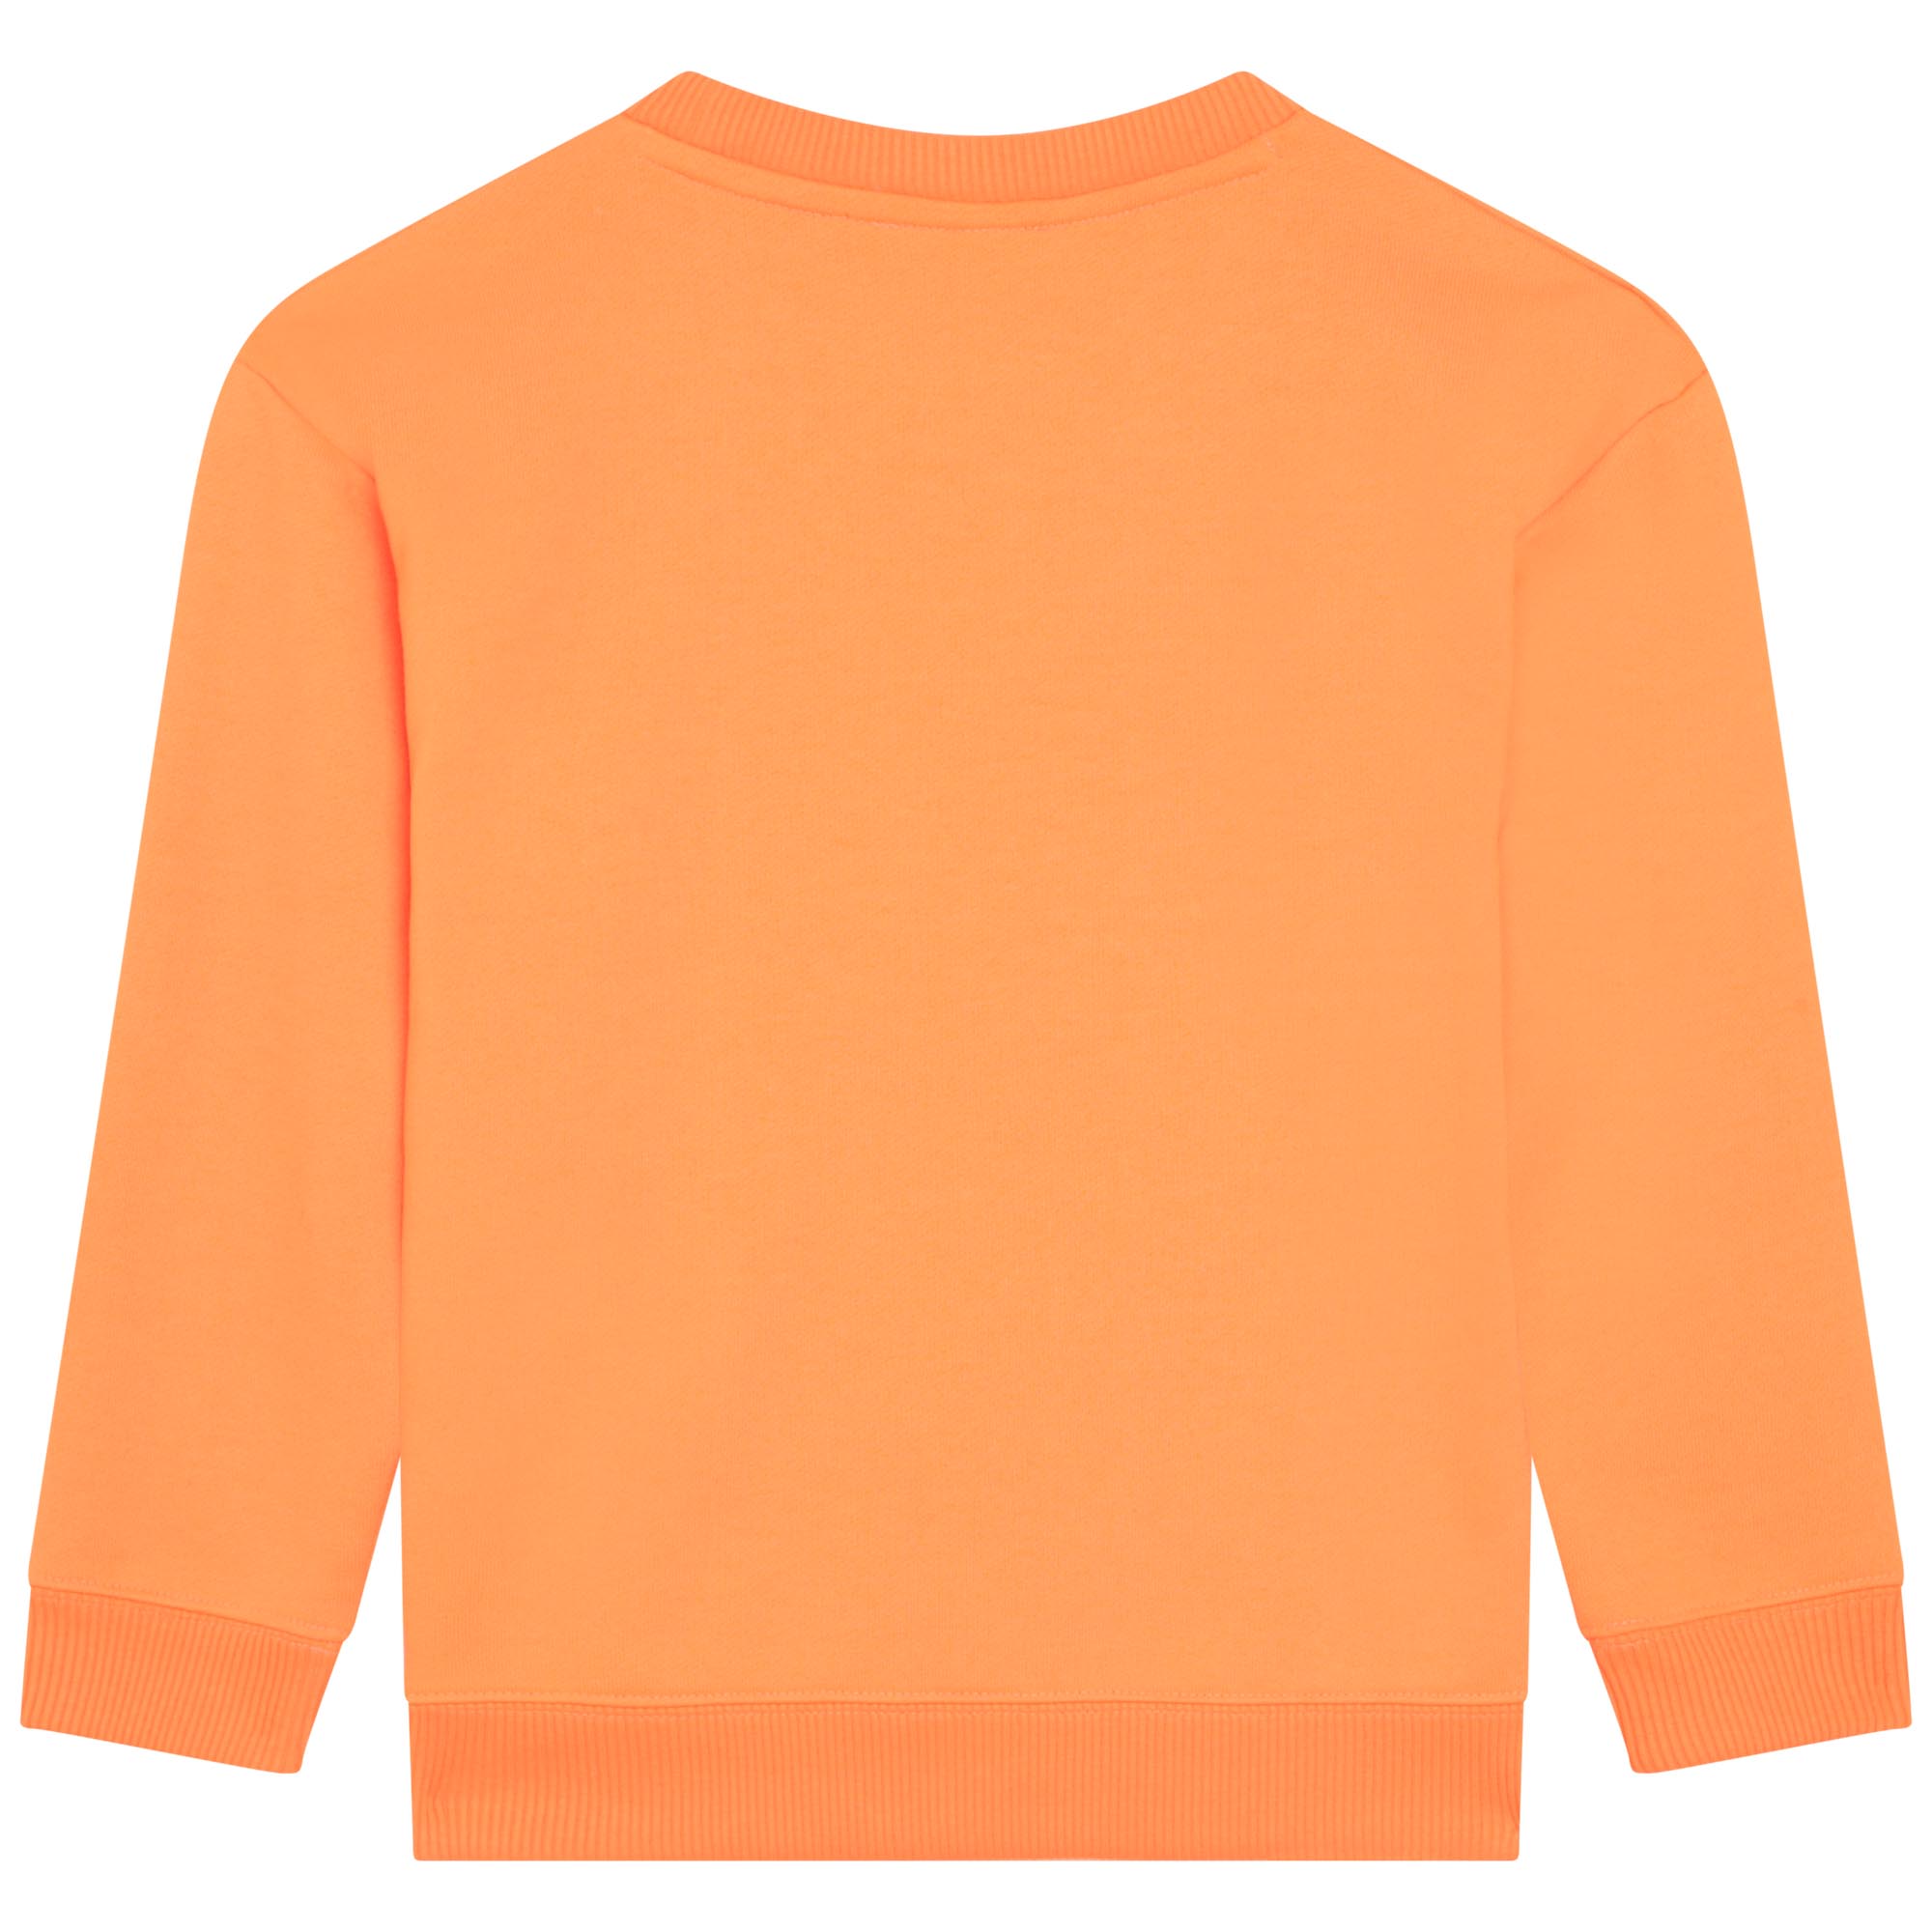 'garfield' sweatshirt MARC JACOBS for BOY